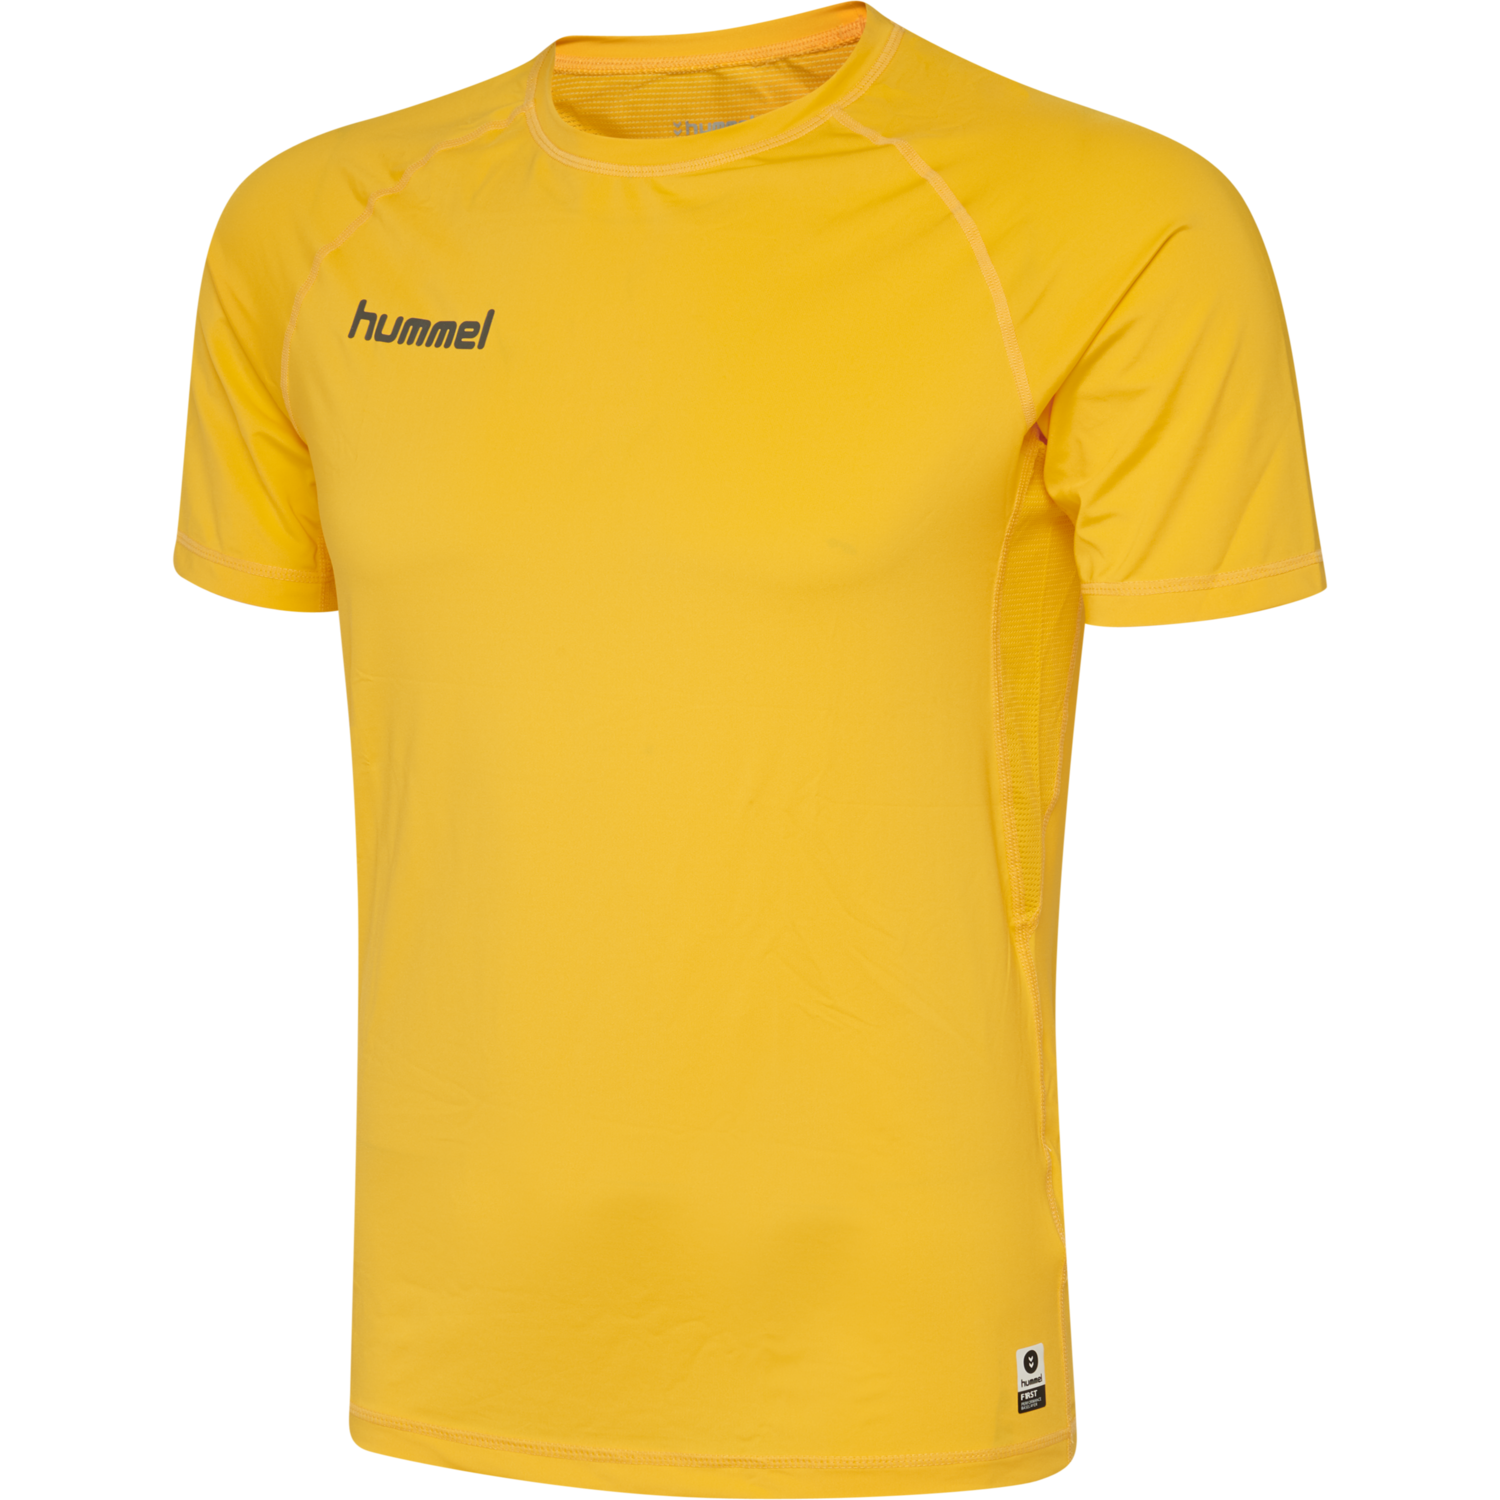 First performance. Hummel футболка. Желтая майка лидера. Stanno Fusion Shirt - Yellow/Royal. Wa798u Performance Yellow.